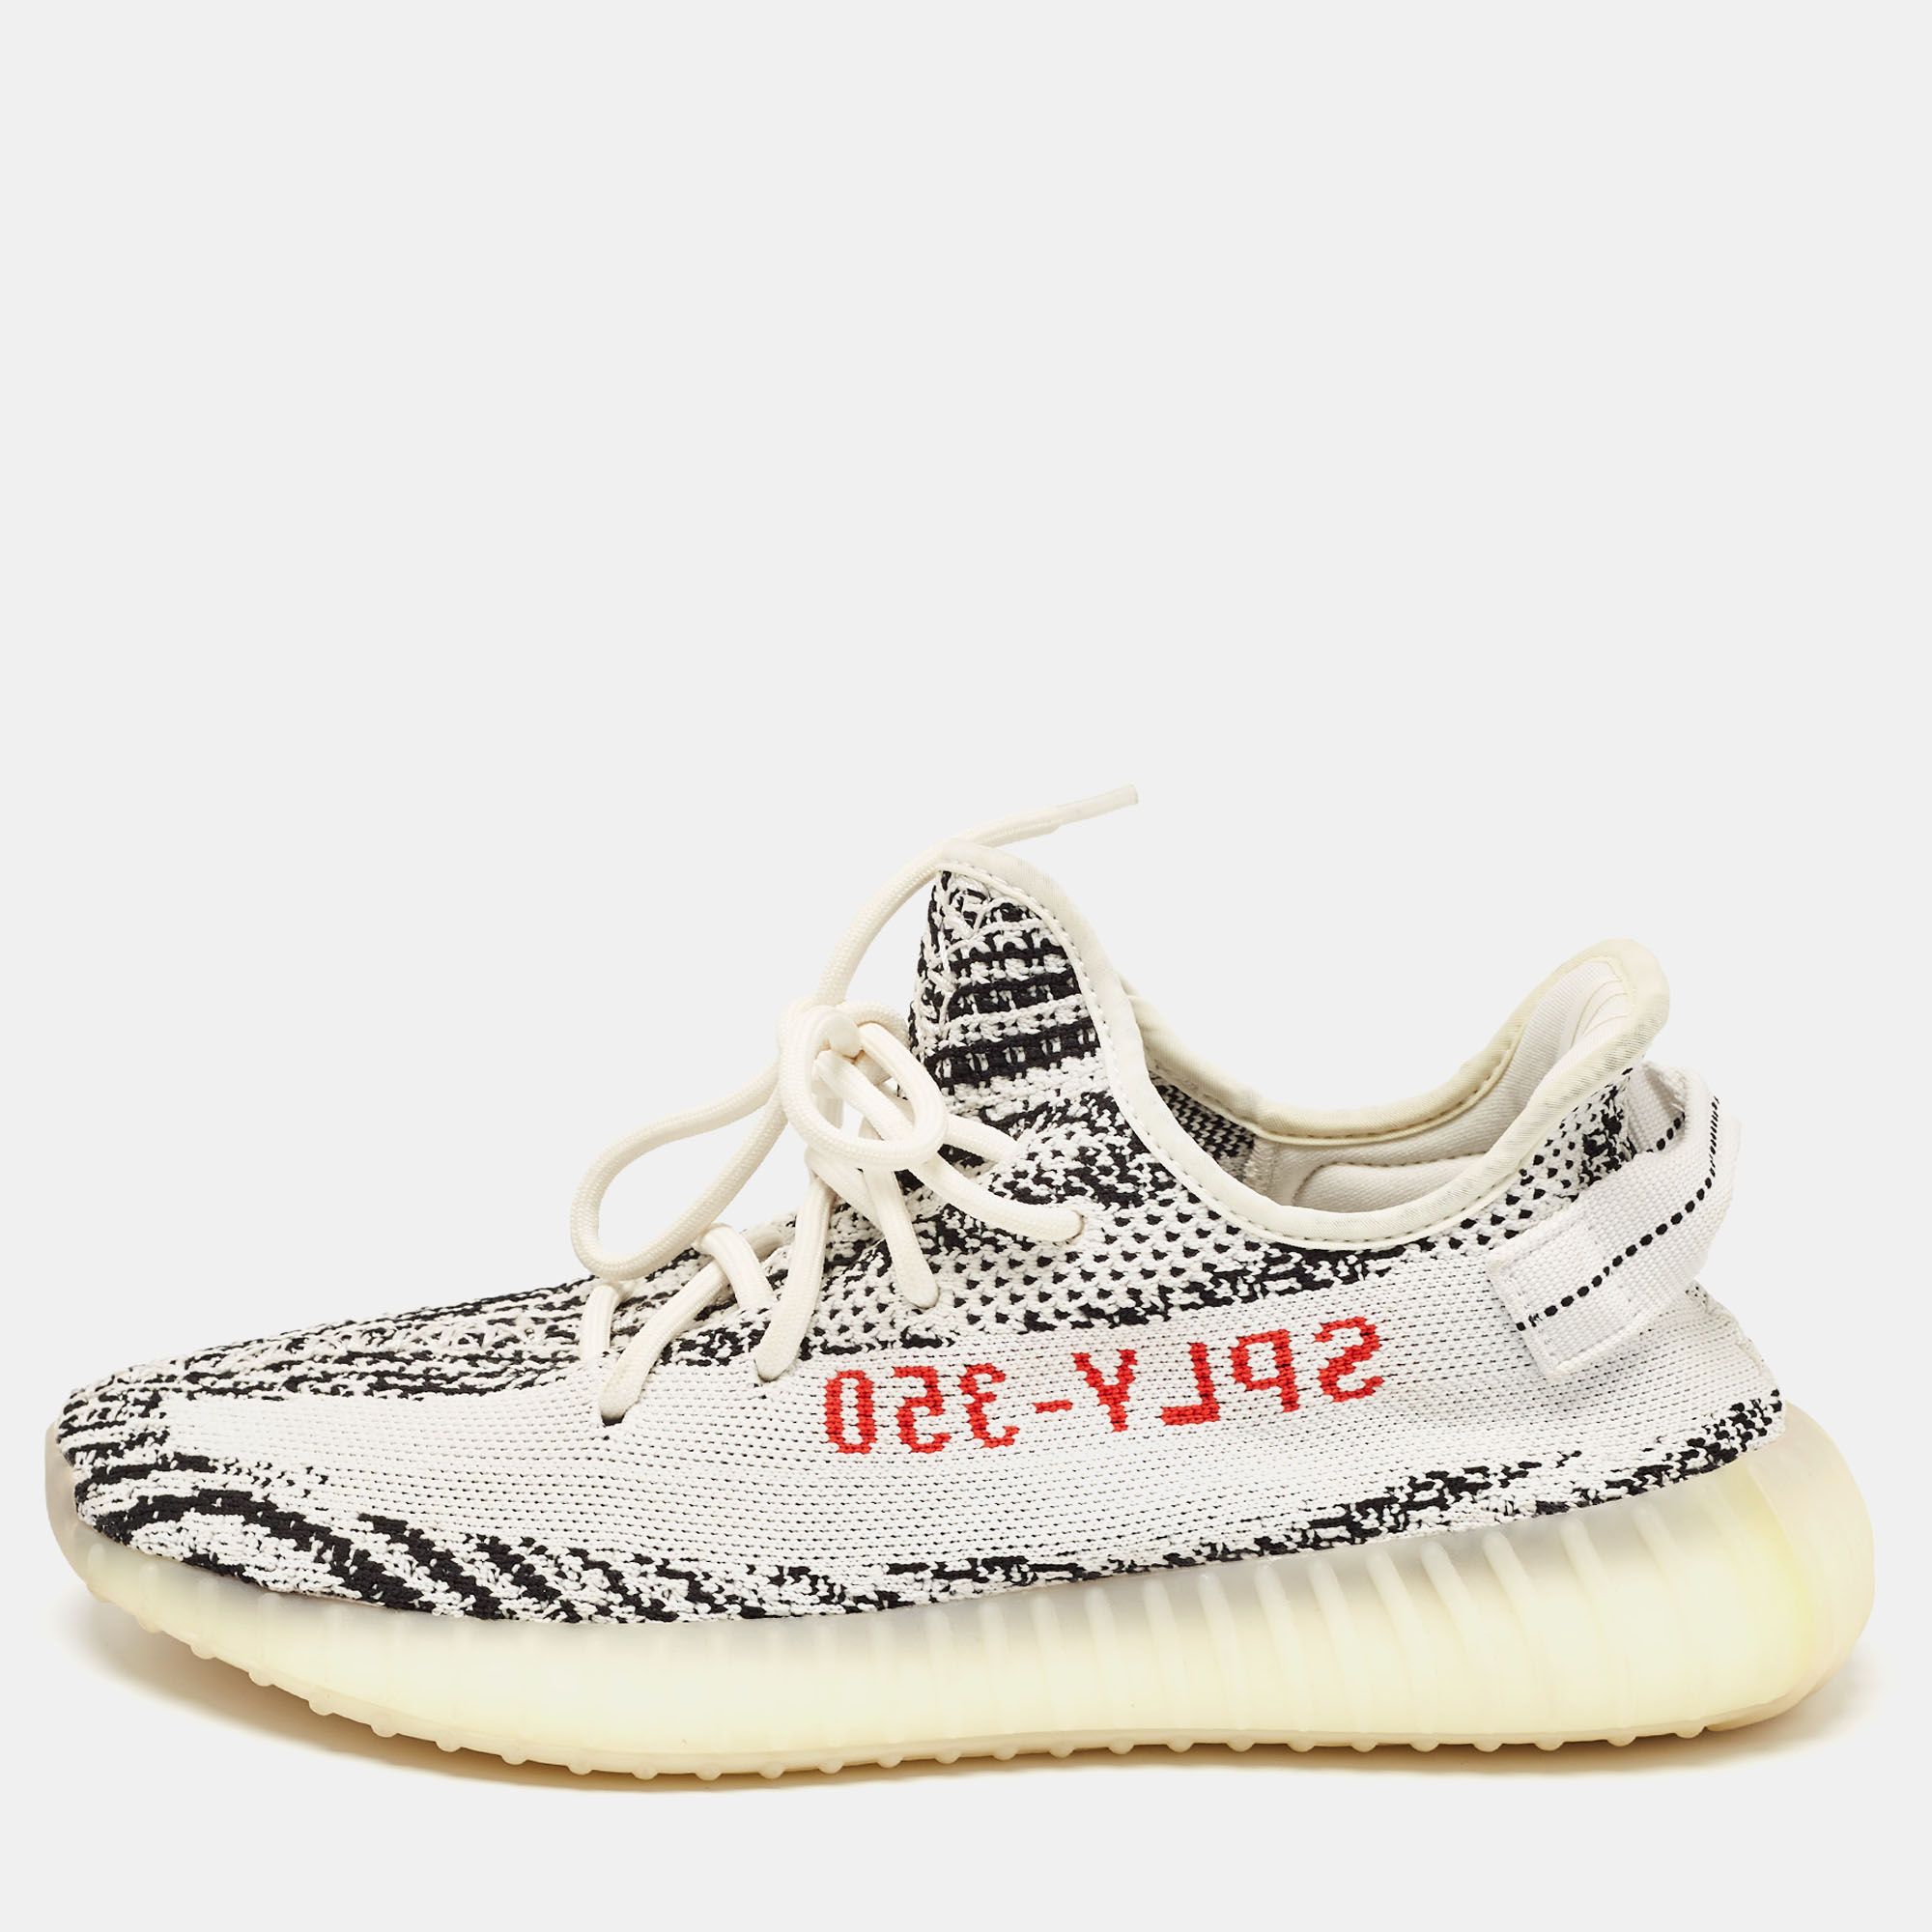 Yeezy x adidas white/black knit fabric boost 350 v2 zebra sneakers size 43 1/3